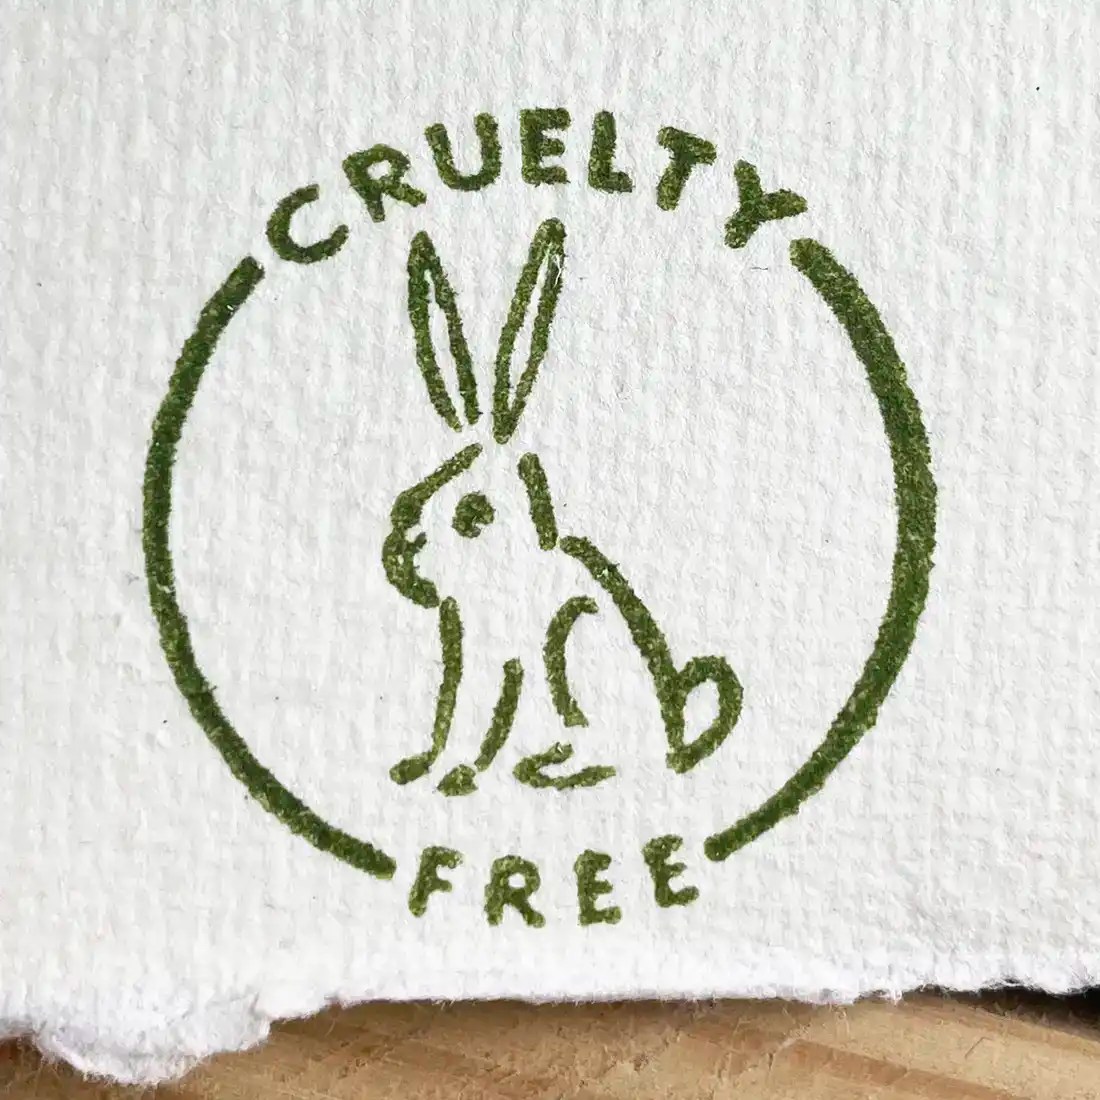 cruelty free rubber stamp